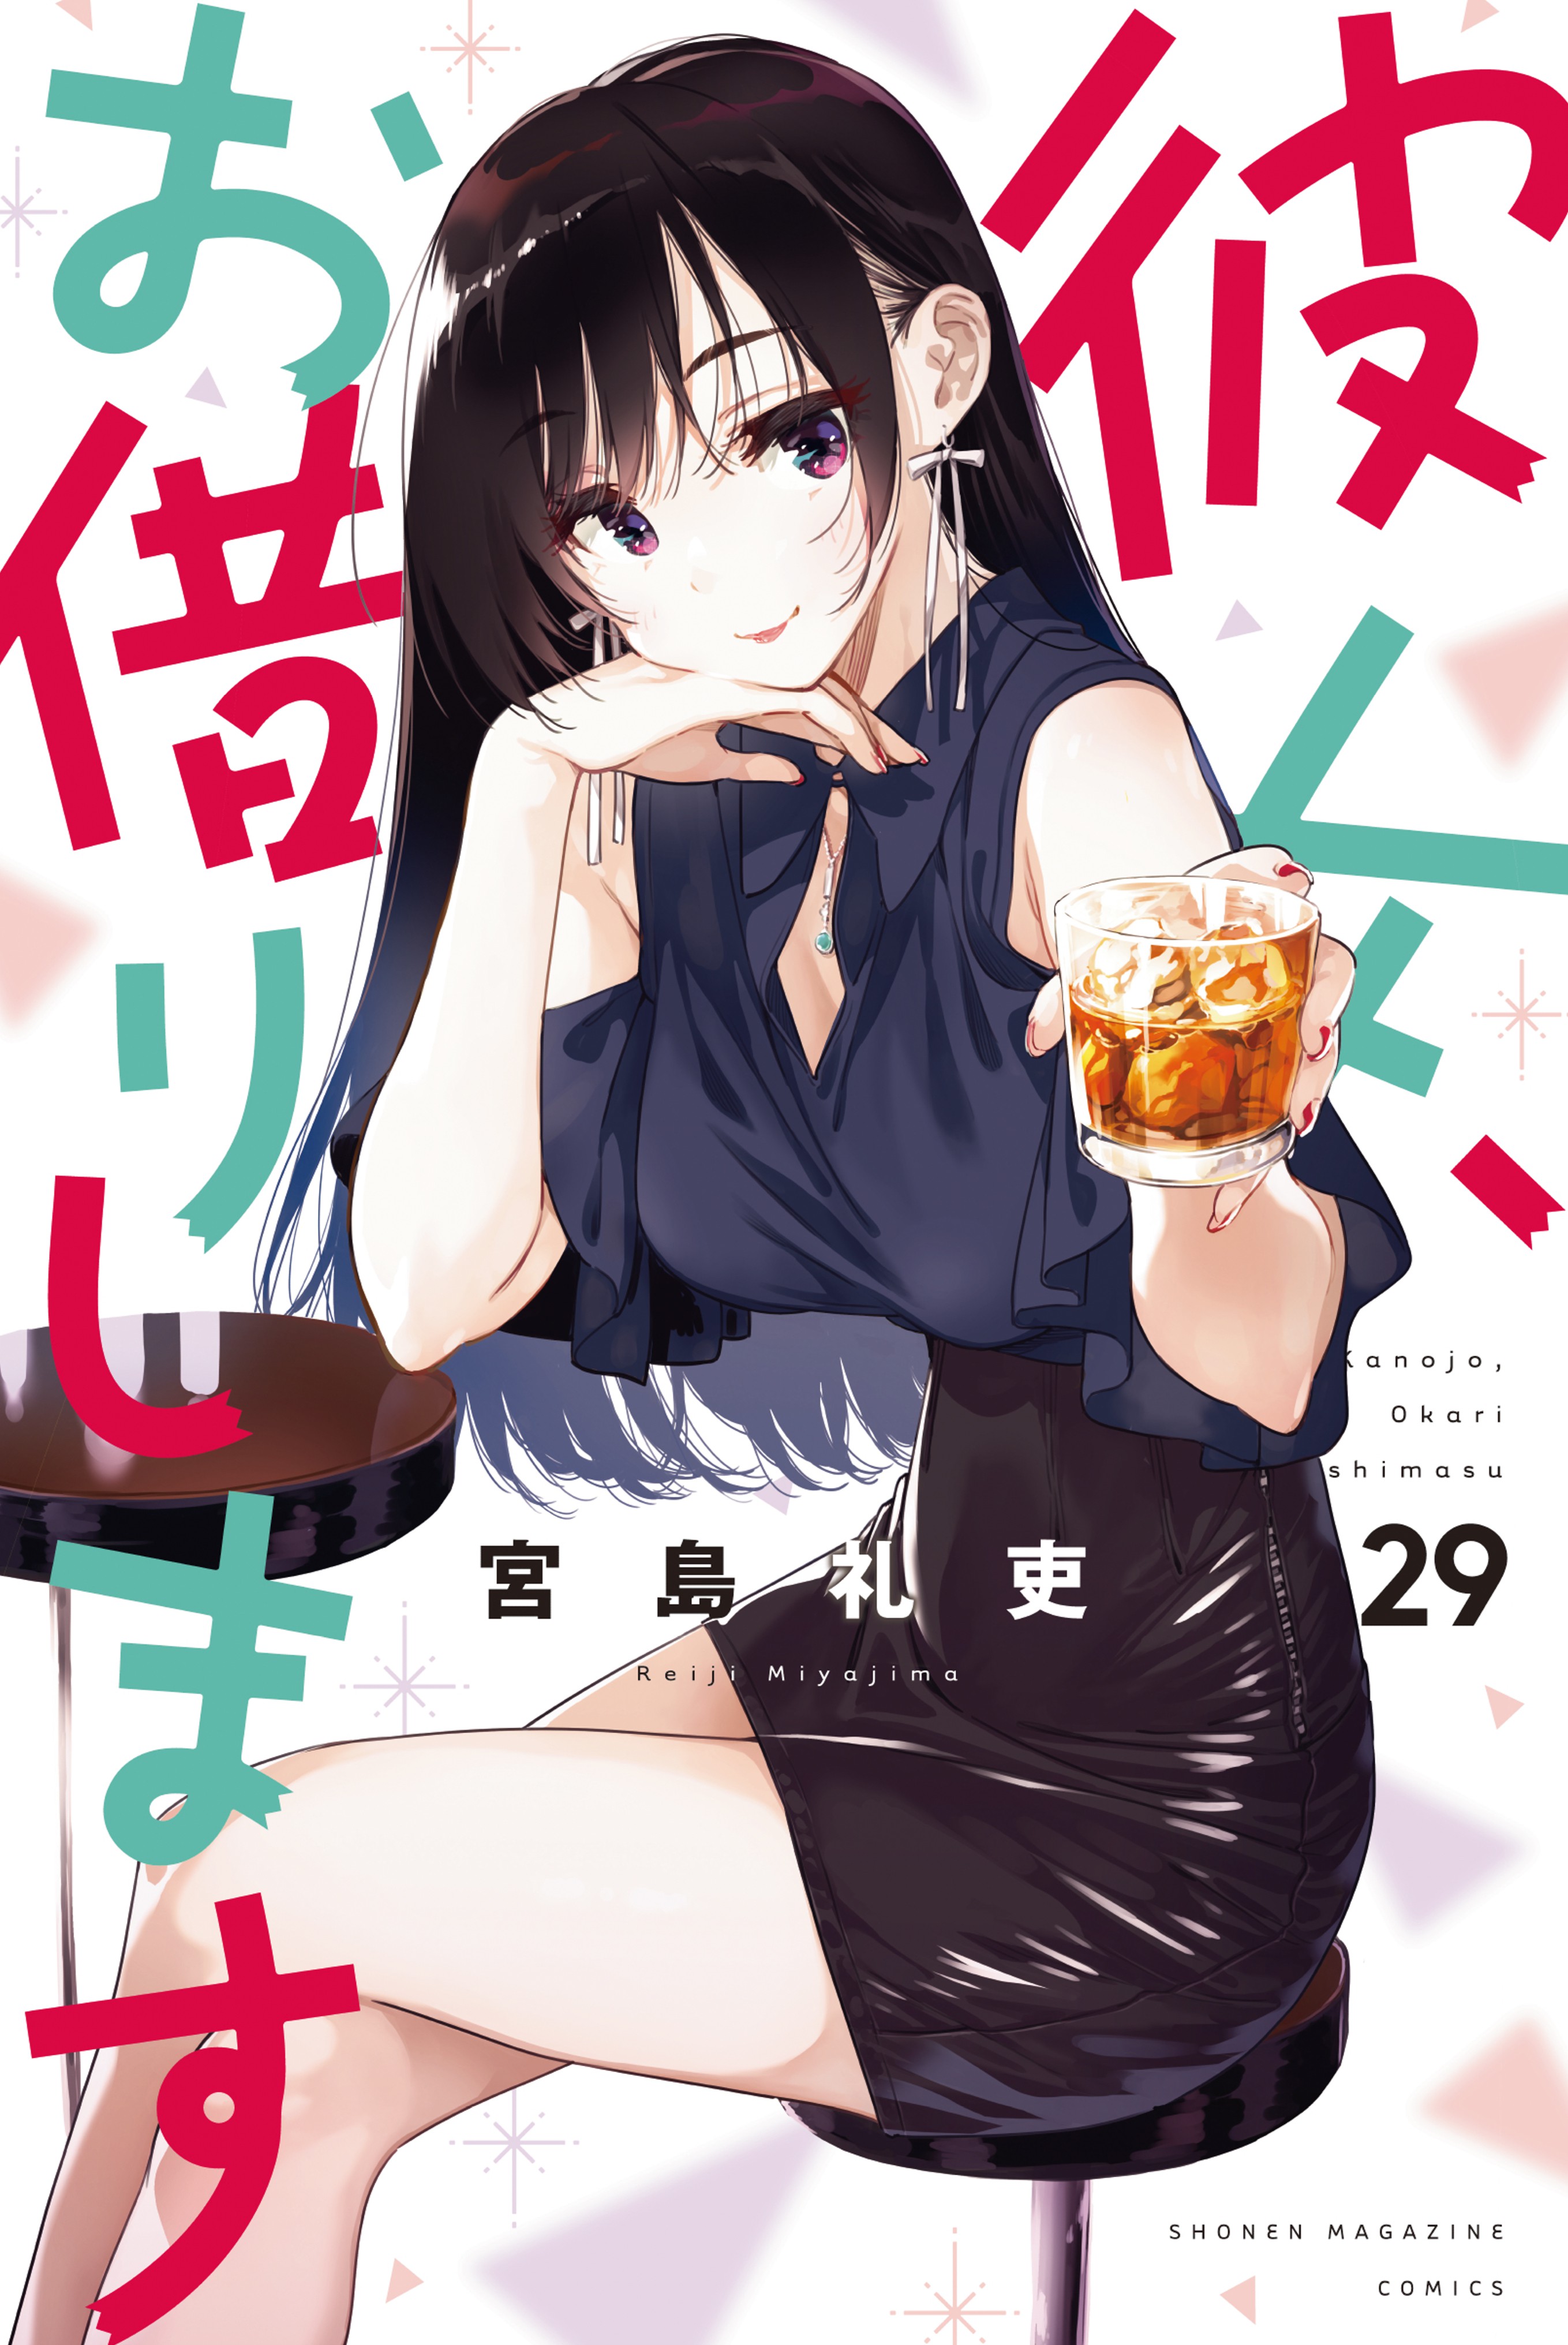 DISC] Rent-A-Girlfriend / Kanojo, Okarishimasu - Ch. 284 - The Girlfriend  And Recreation - MangaDex : r/manga